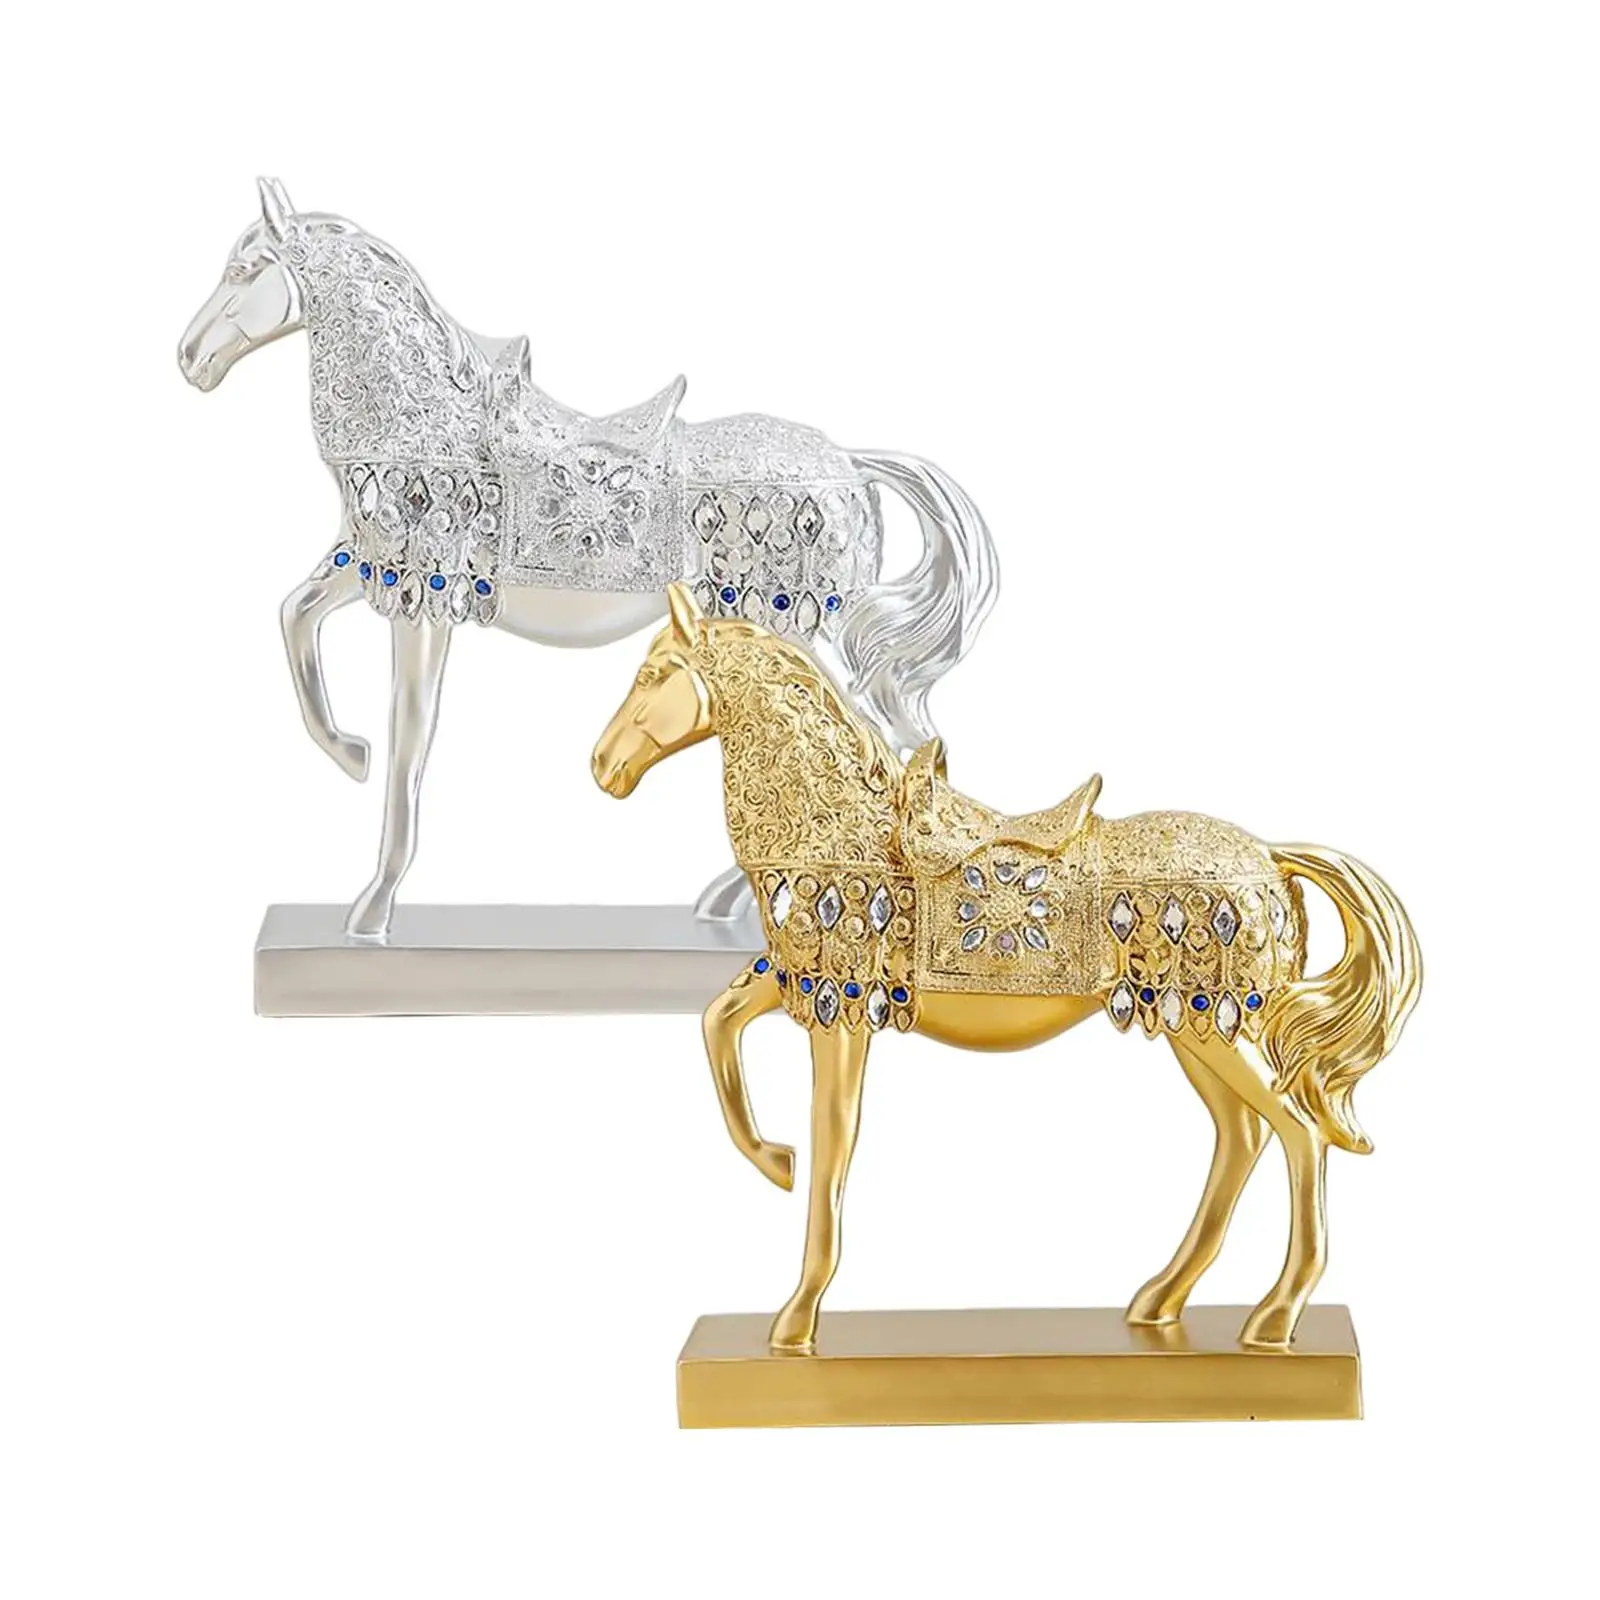 Horse Statue Resin Figurine Decorative Crafts Art for Table Decor